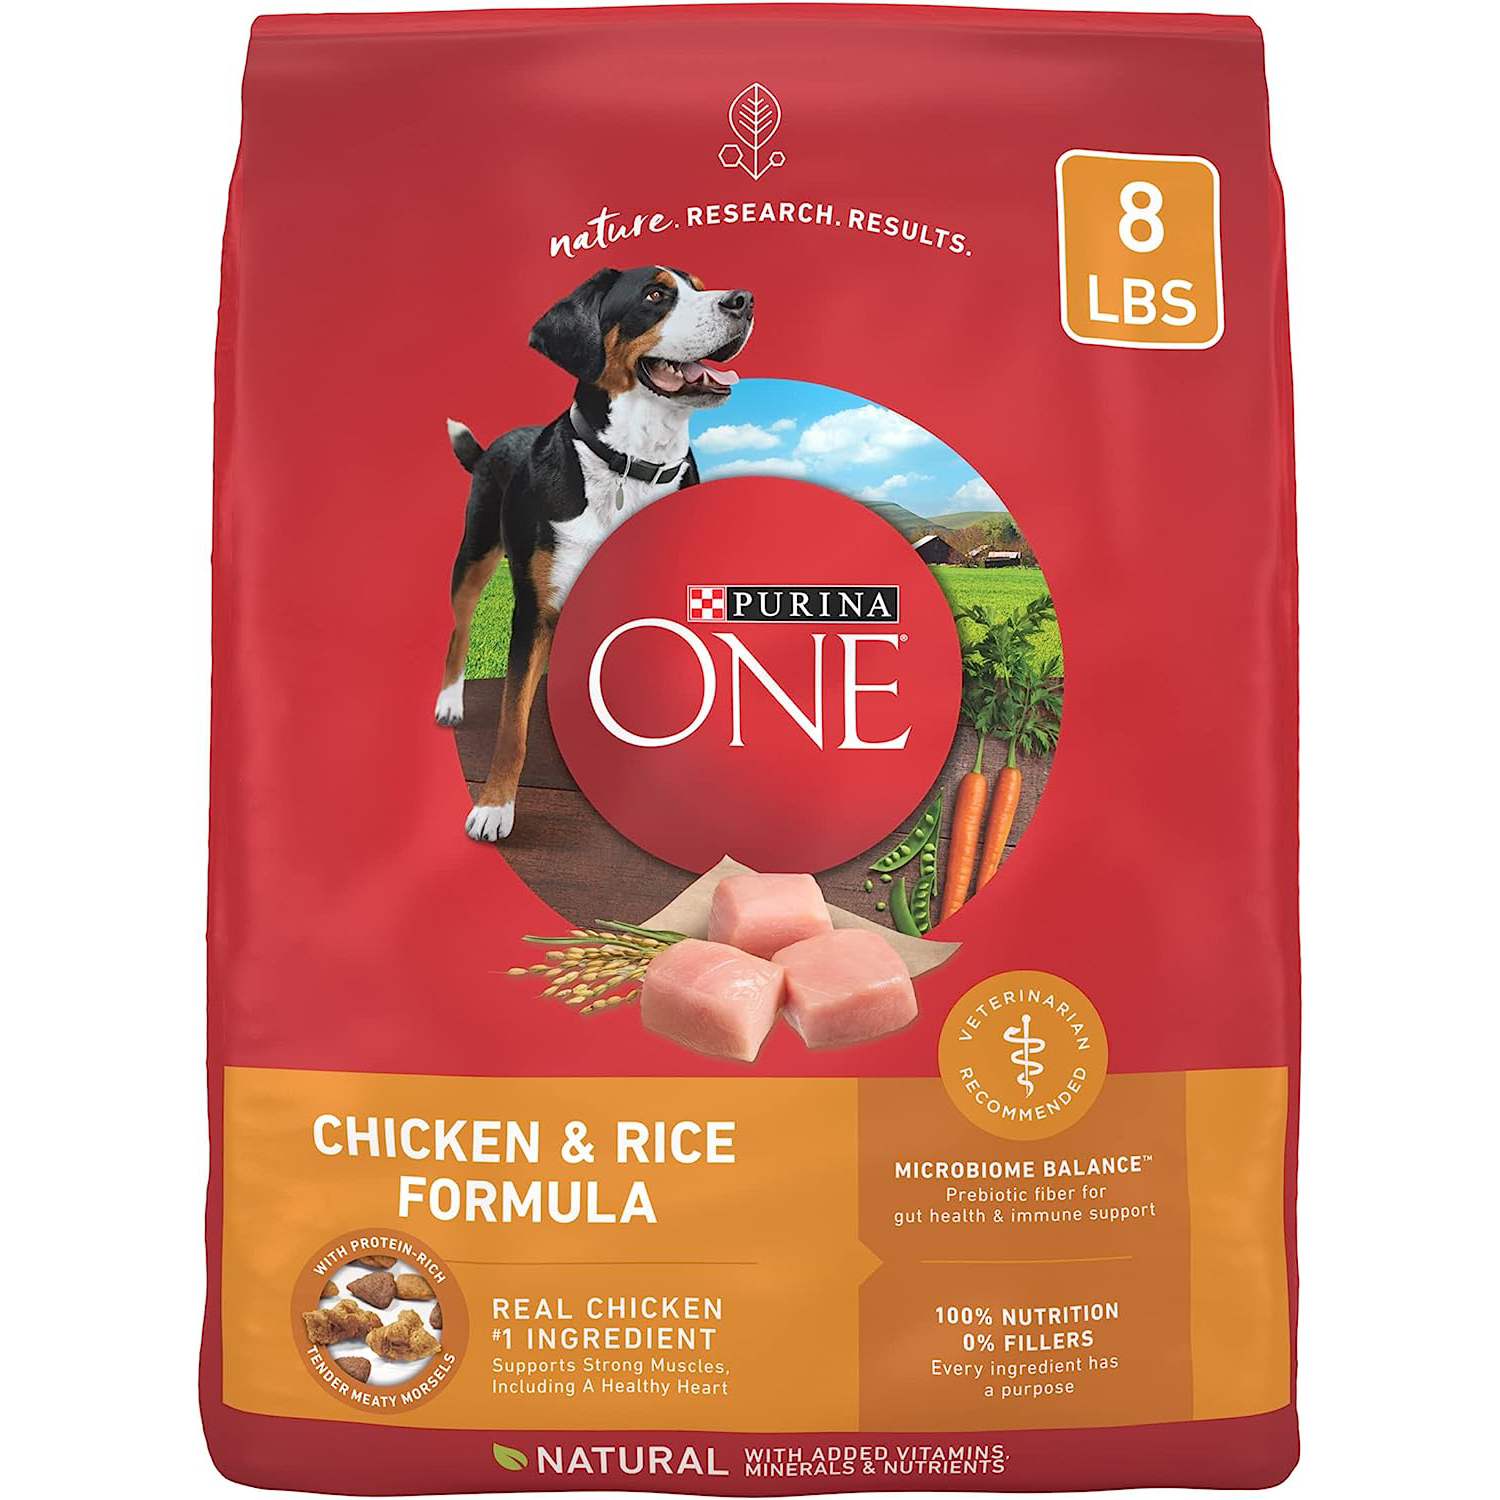 Purina ONE Natural Dry Dog Food, SmartBlend Chicken & Rice Formula